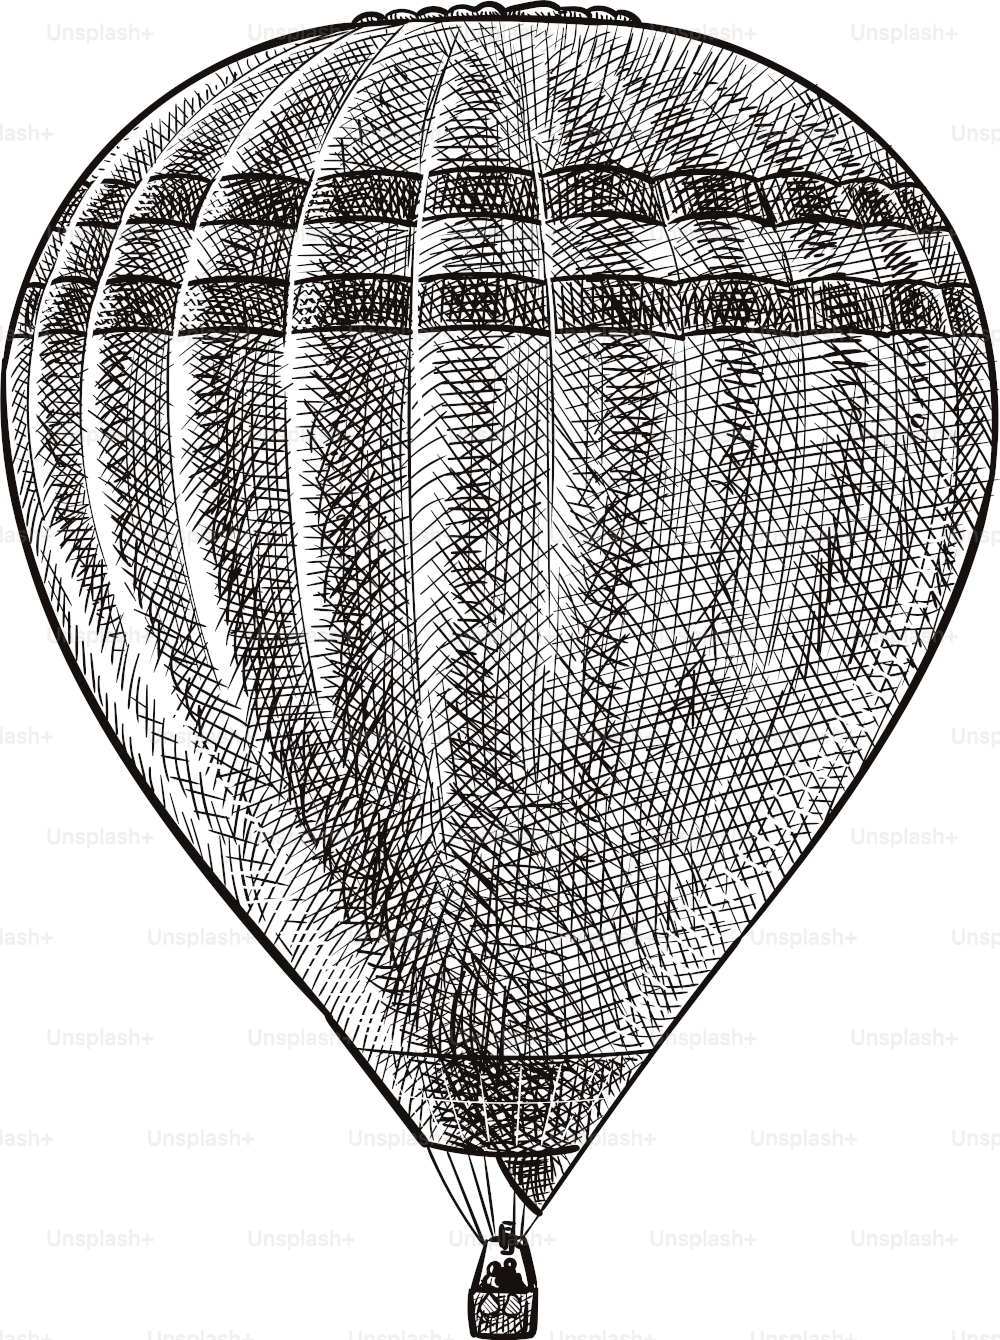 Old style illustration of a balloon